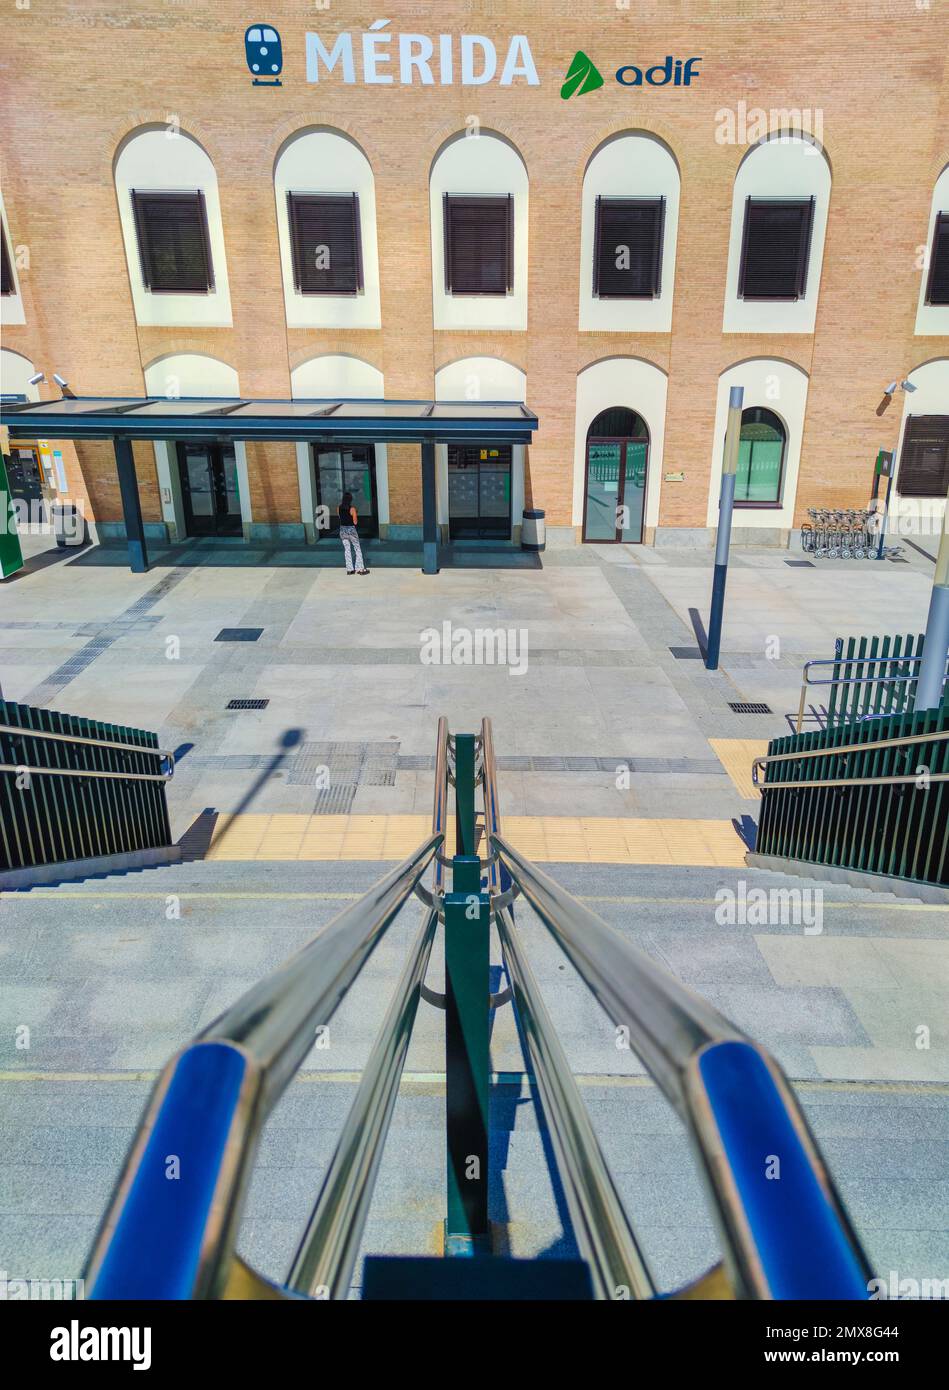 Merida, Spain - Setp 18th, 2021: Merida train station stairs access. Chrome handrails Stock Photo